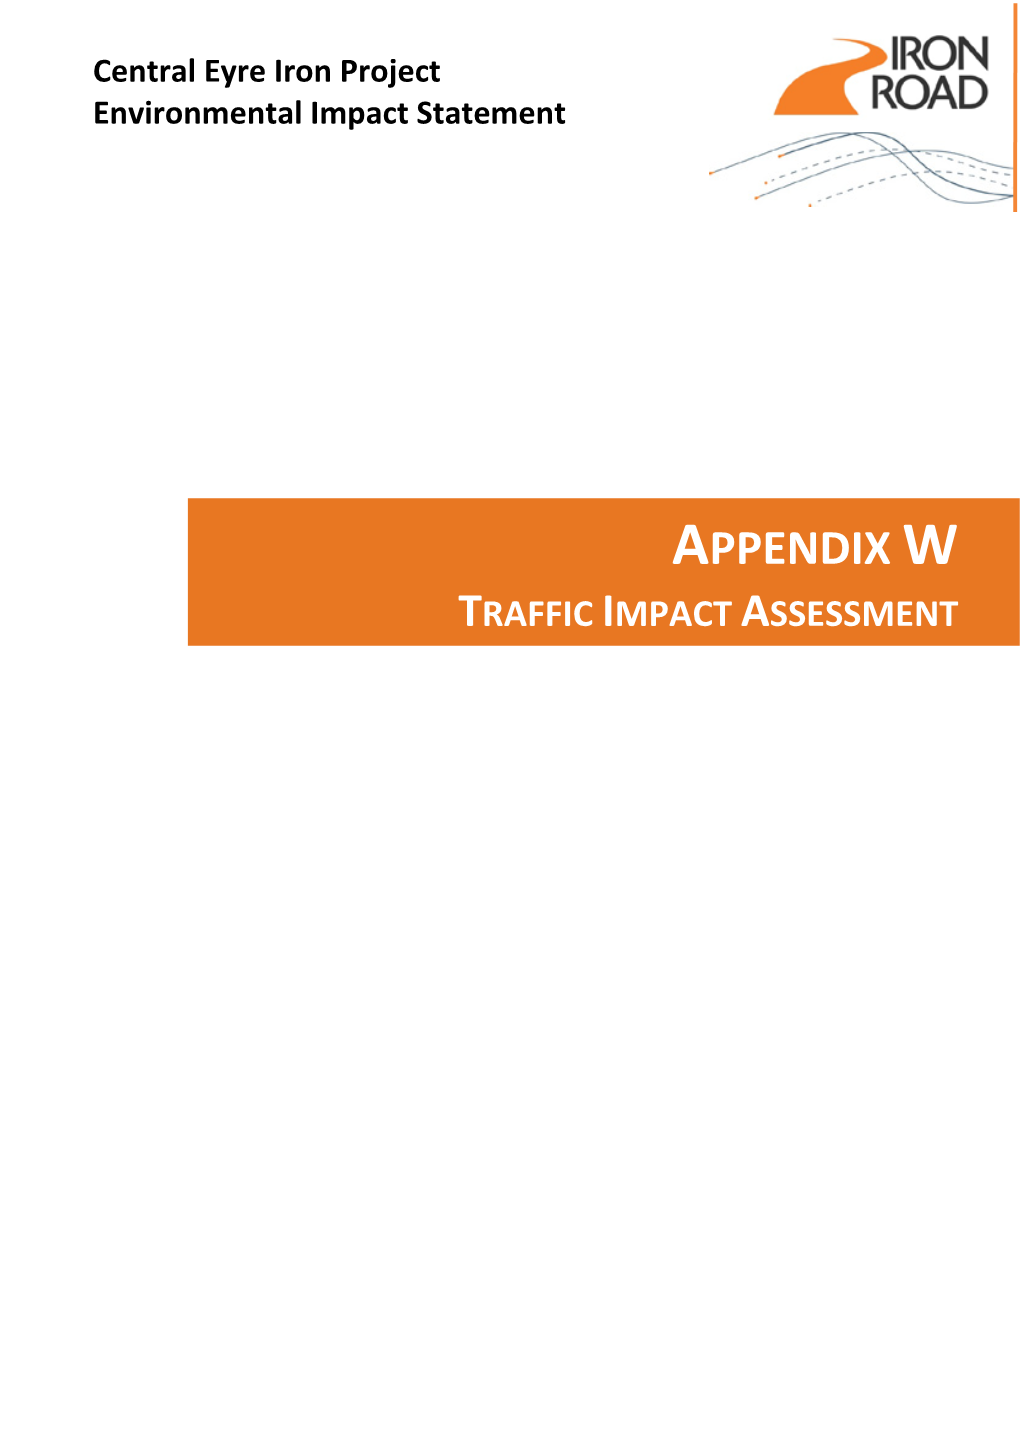 Appendix W: Traffic Impact Assessment